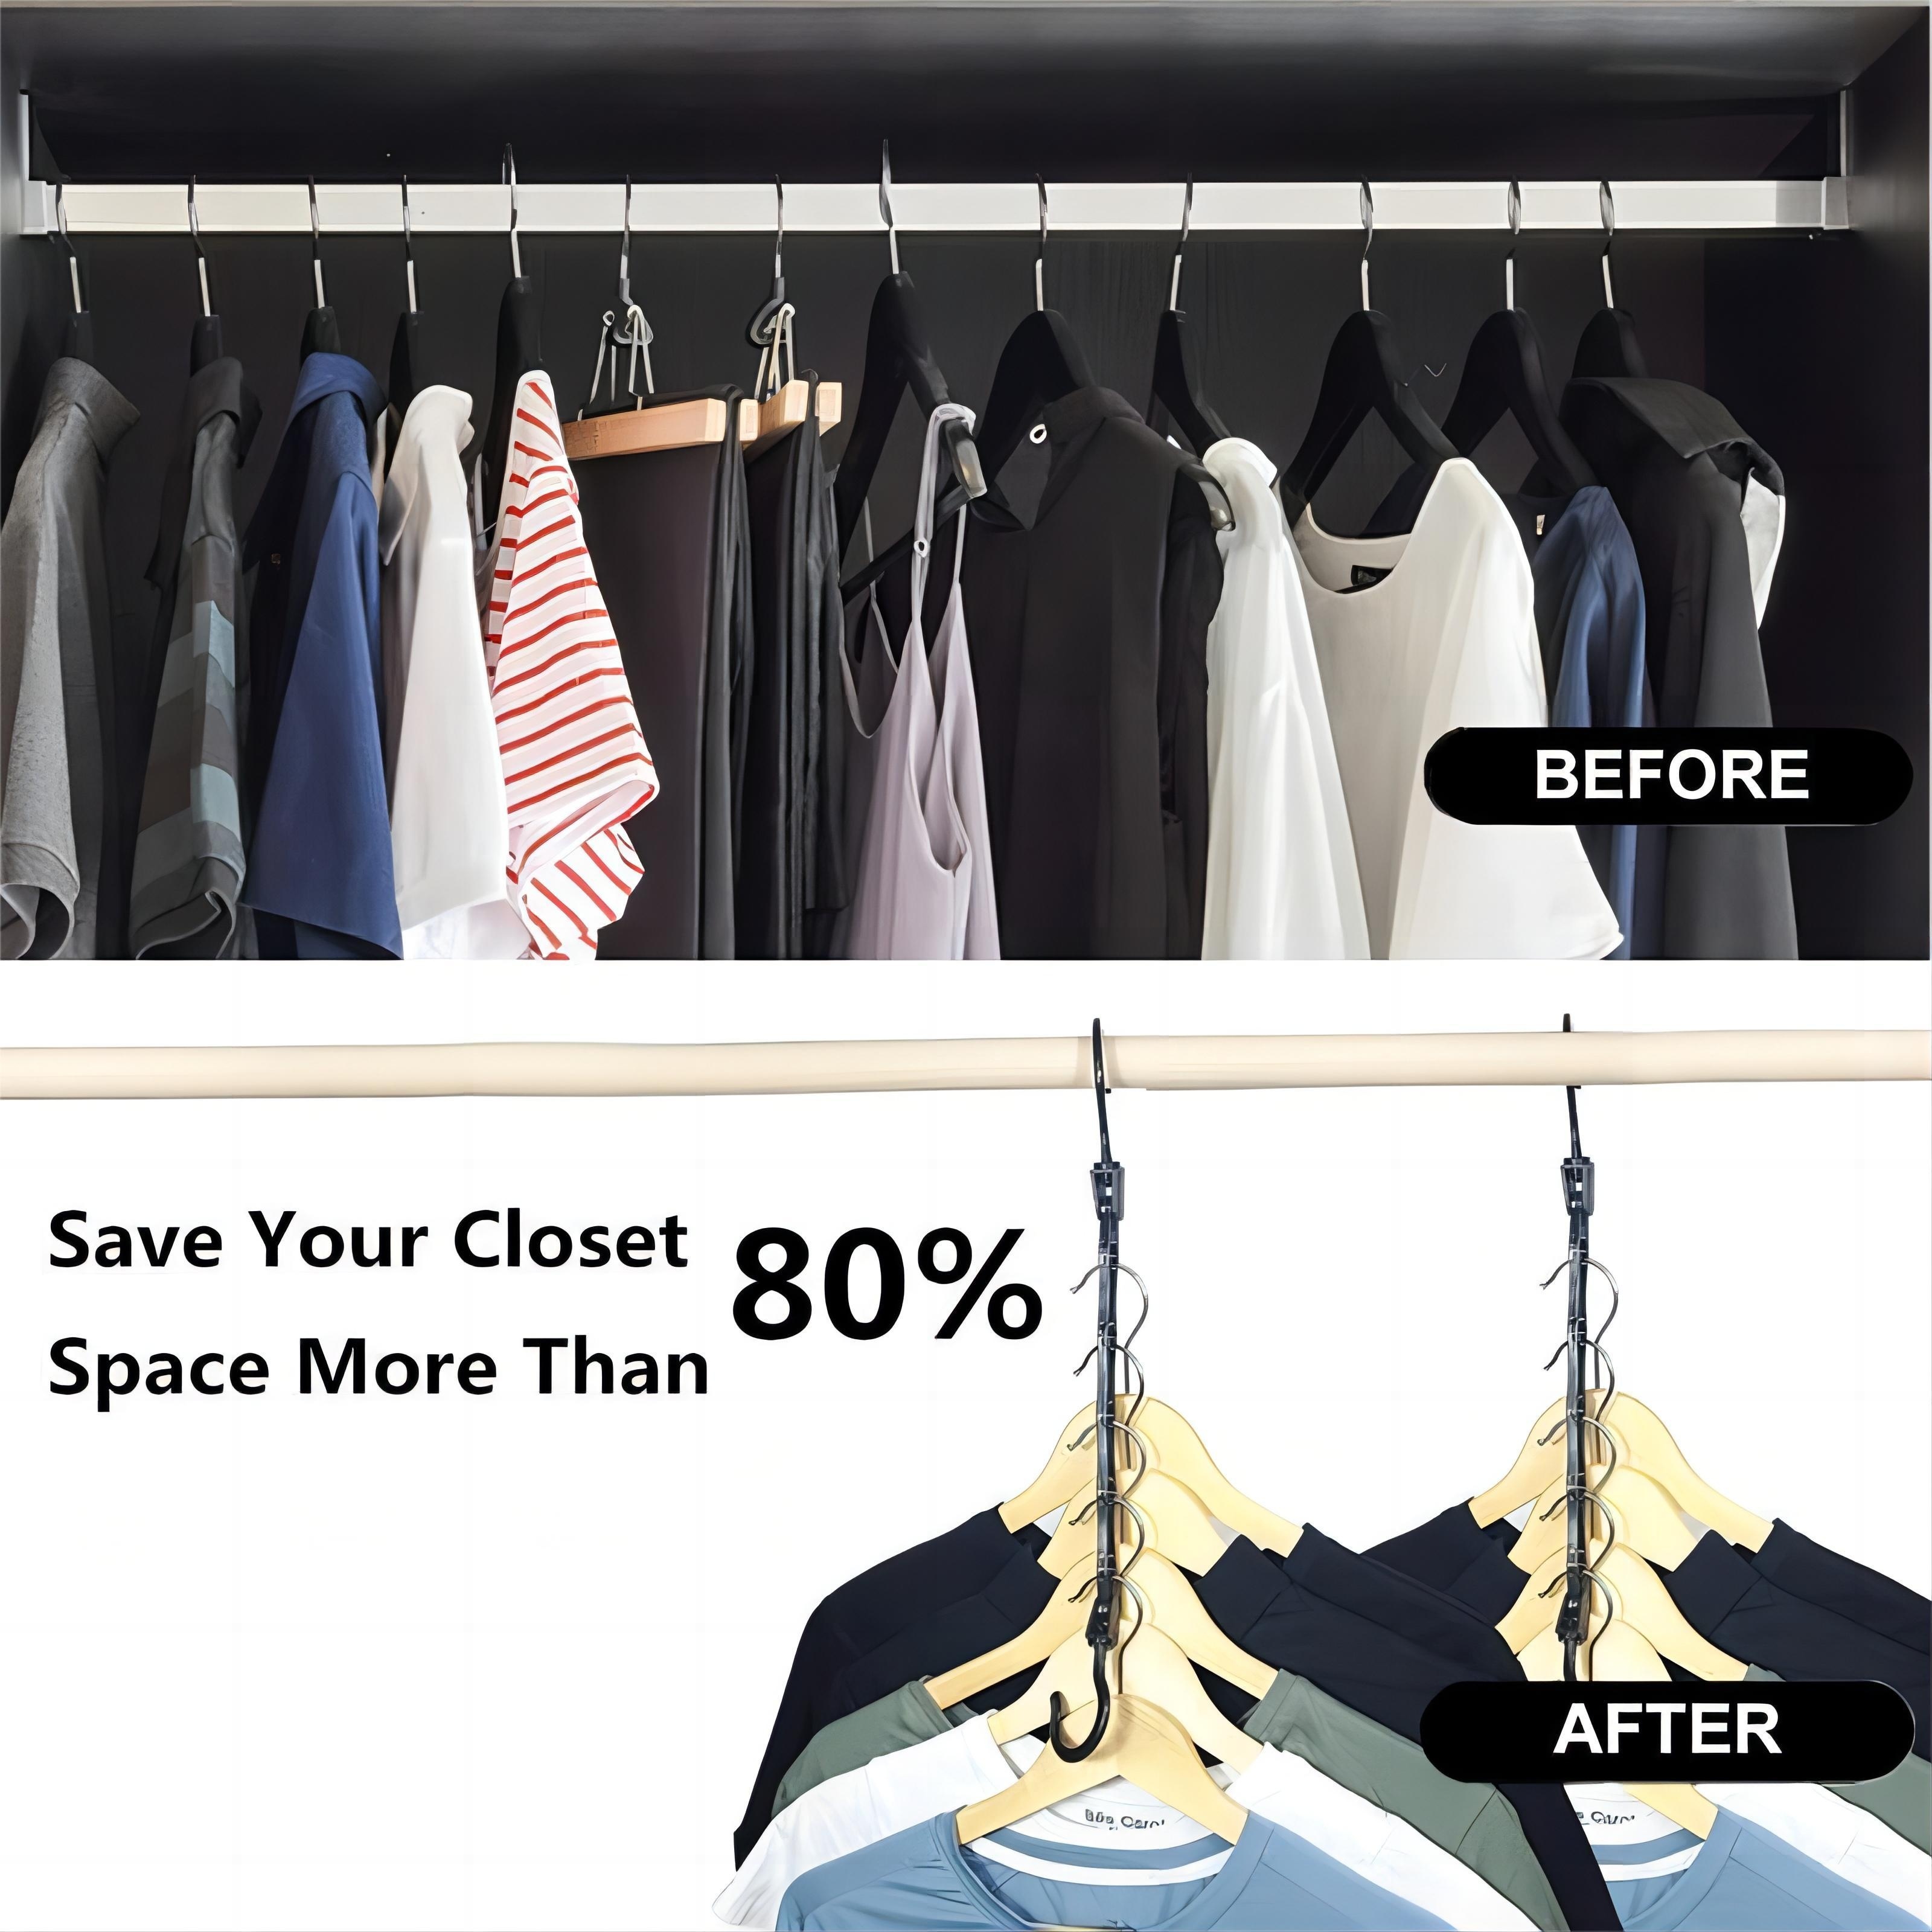 Space Saver Hangers.  Space Saver Hangers: Need more wardrobe